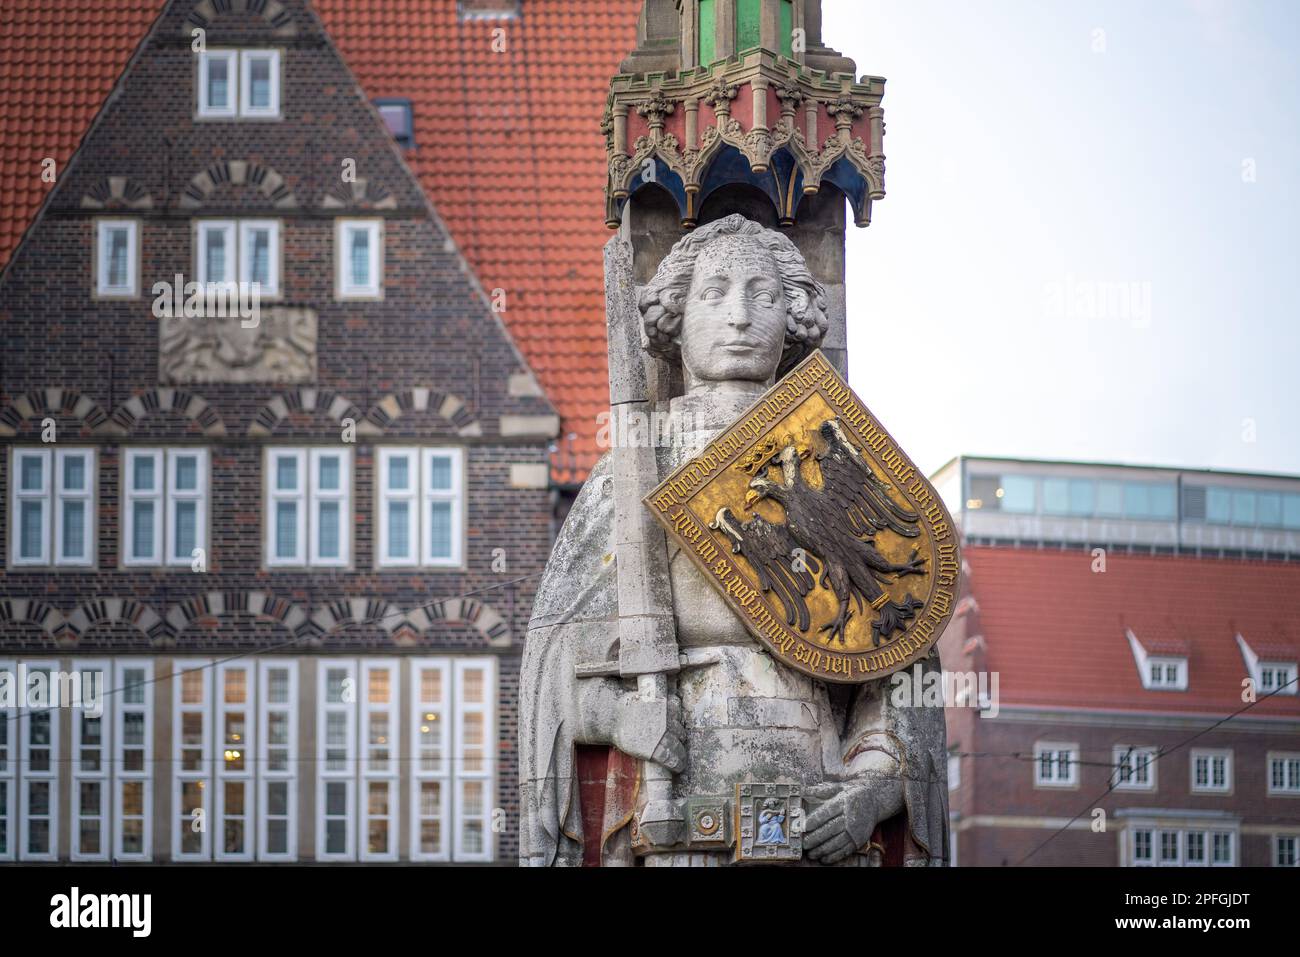 Bremen Roland Statue at Market Square - Bremen, Germany Stock Photo